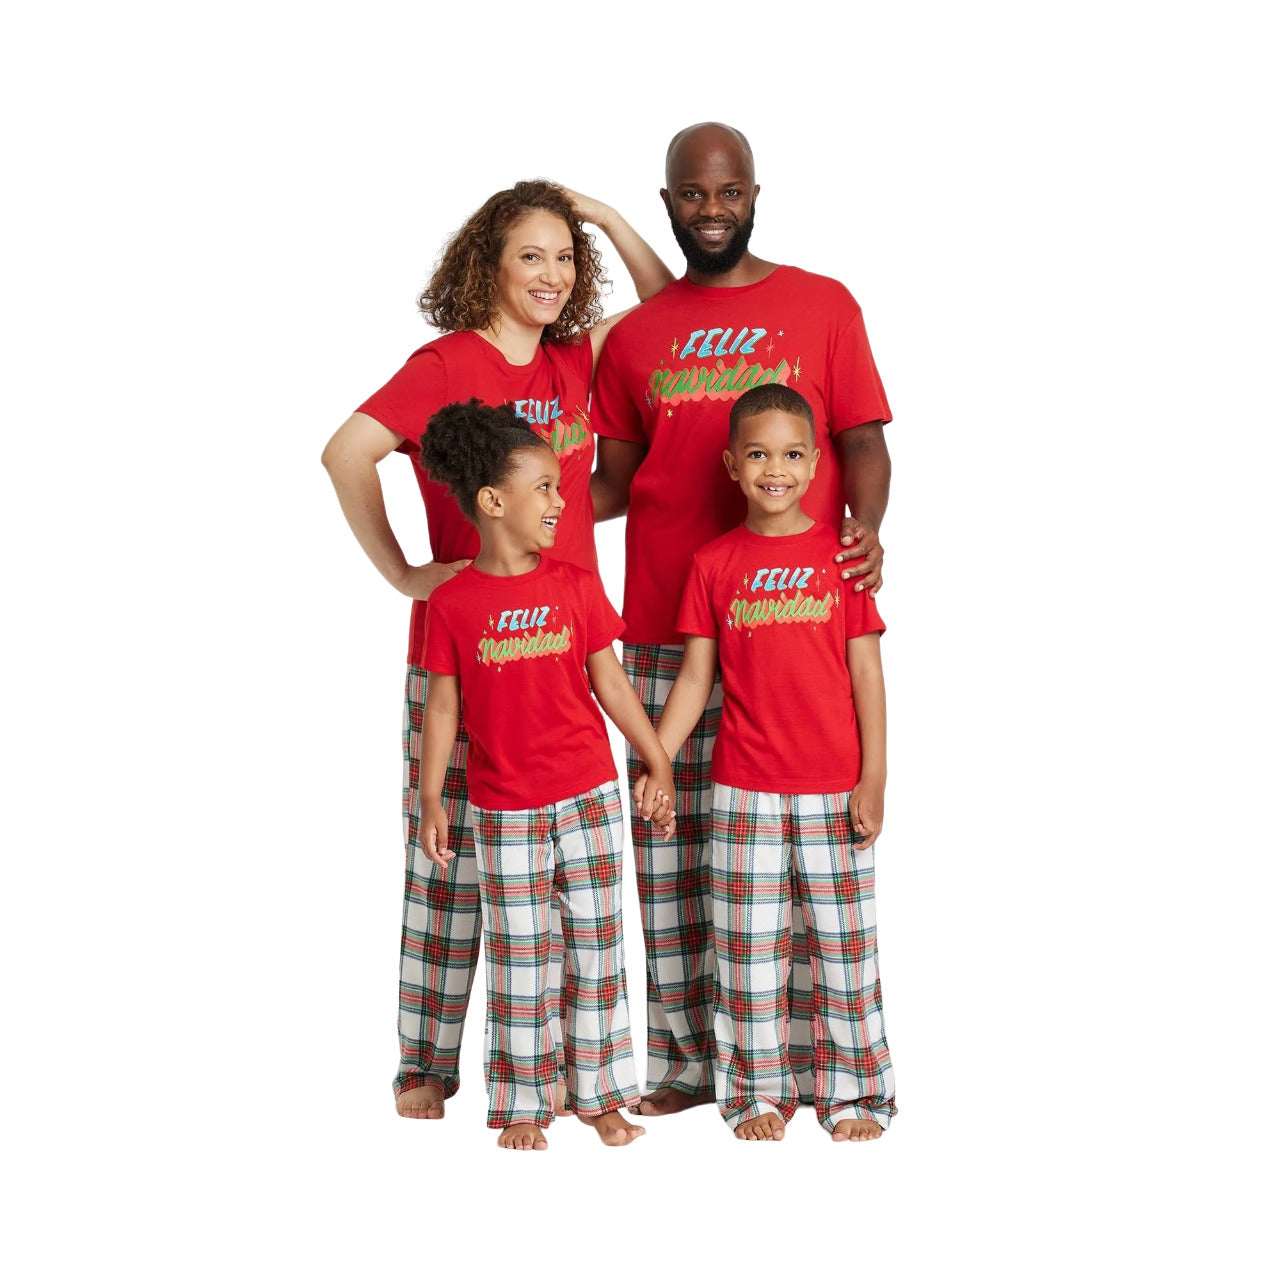 Women's Holiday Feliz Navidad Matching Family Pajama T-Shirt - Wondershop Red XX